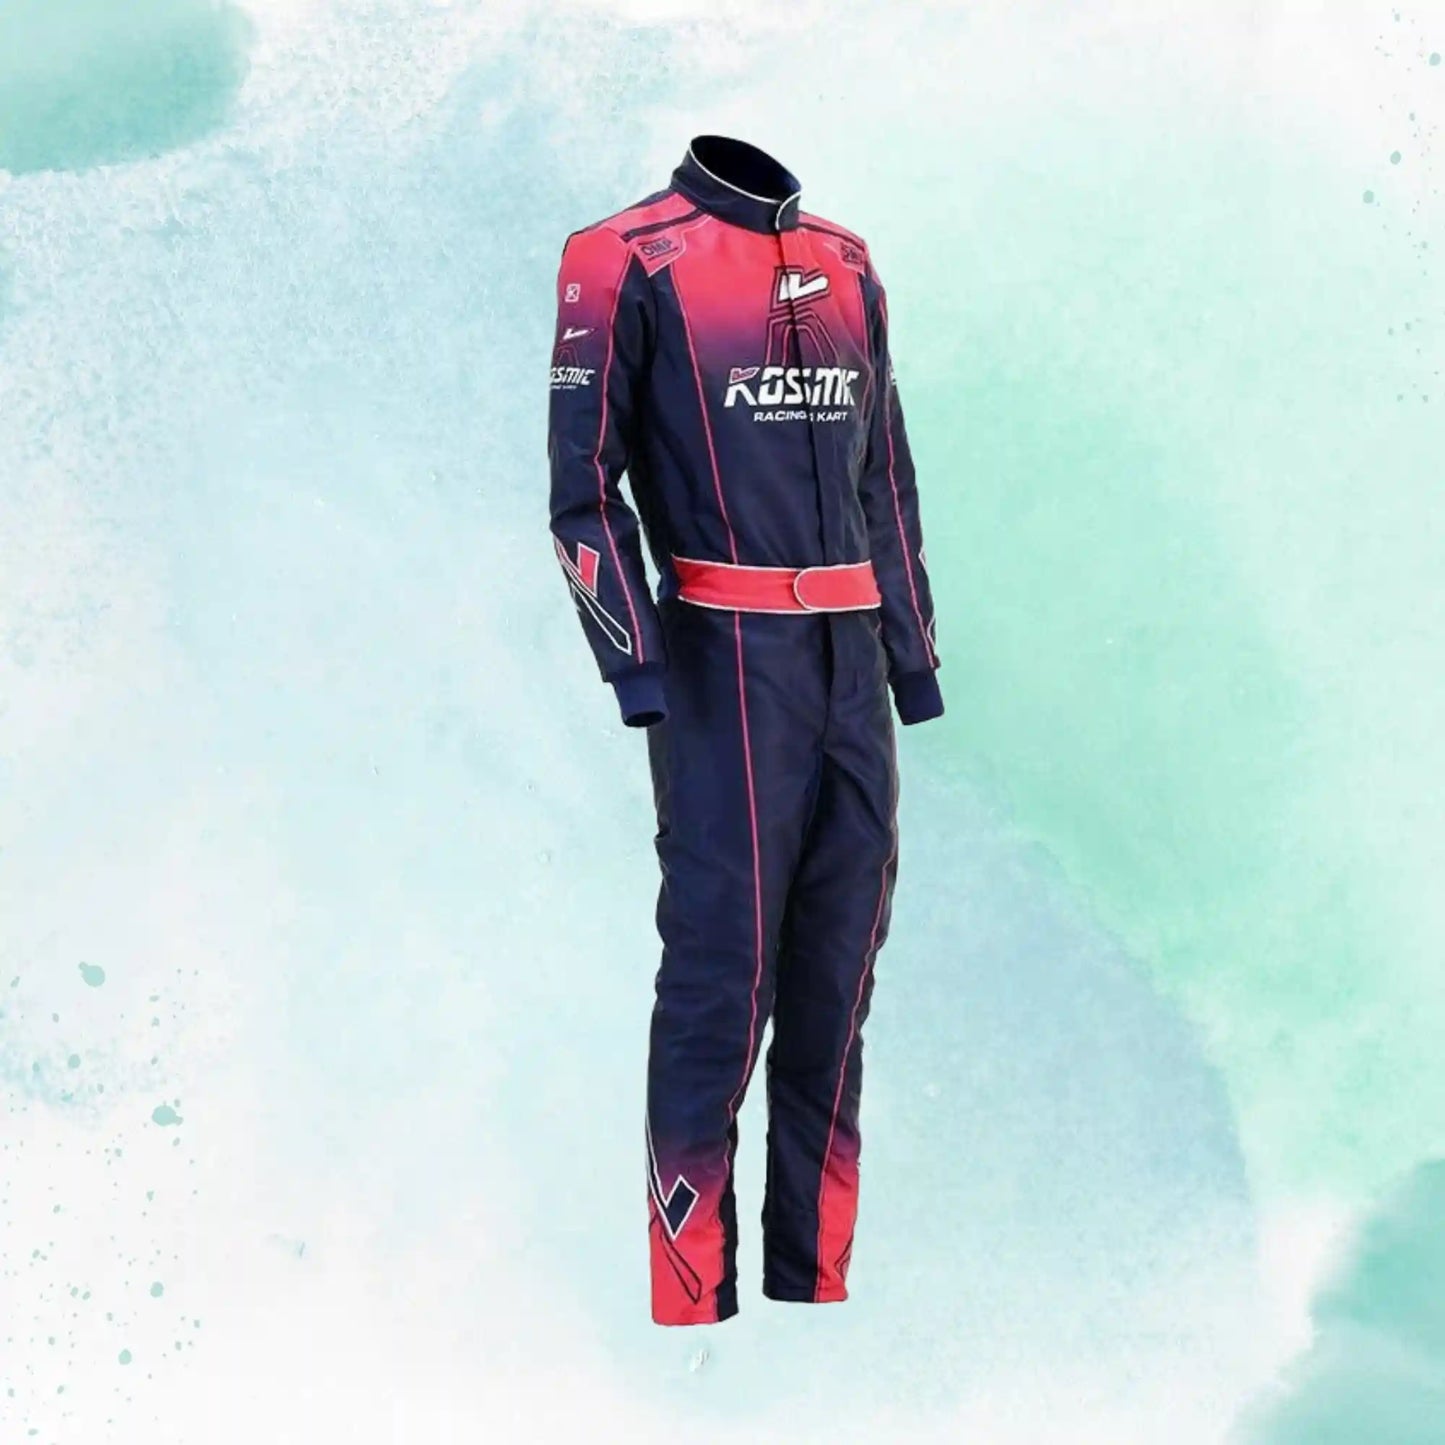 Kosmic Overall Go Kart Driver Racing Suit 2020 Sublimation Printed